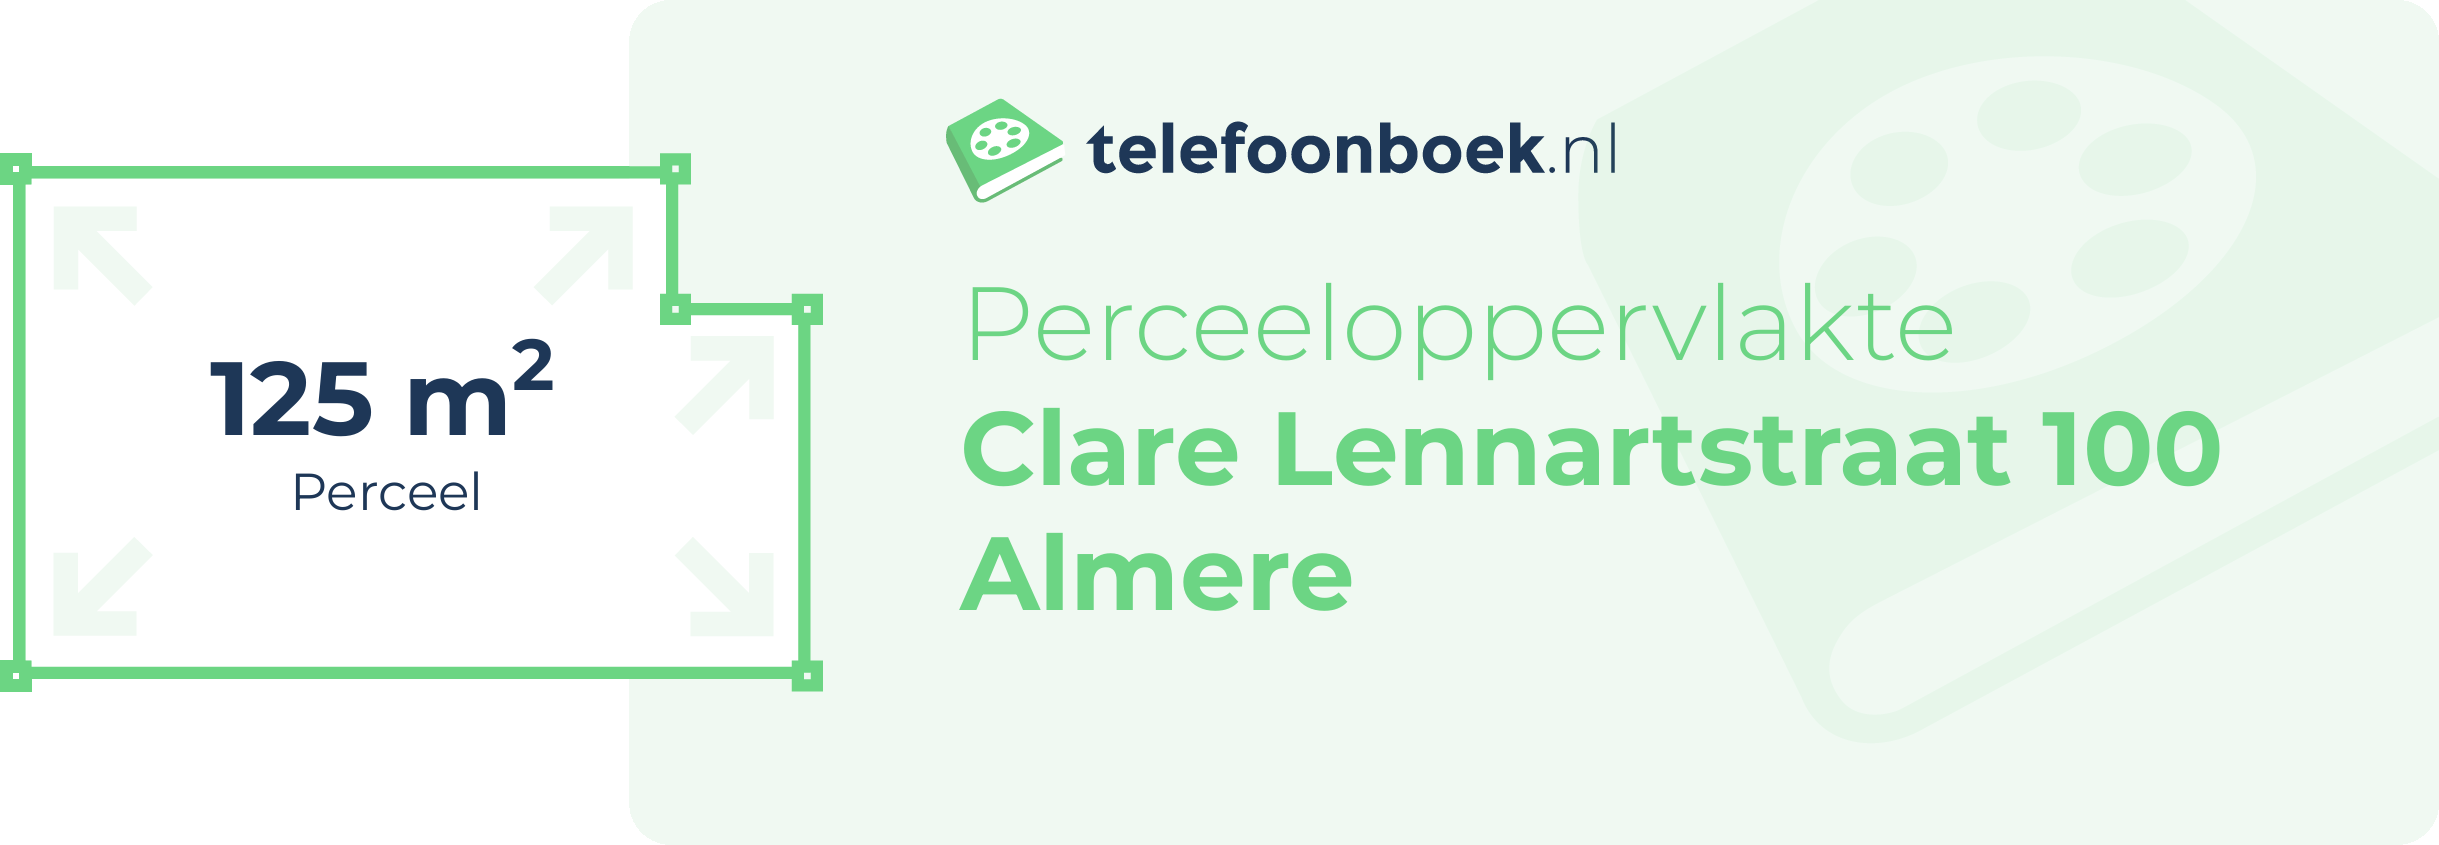 Perceeloppervlakte Clare Lennartstraat 100 Almere